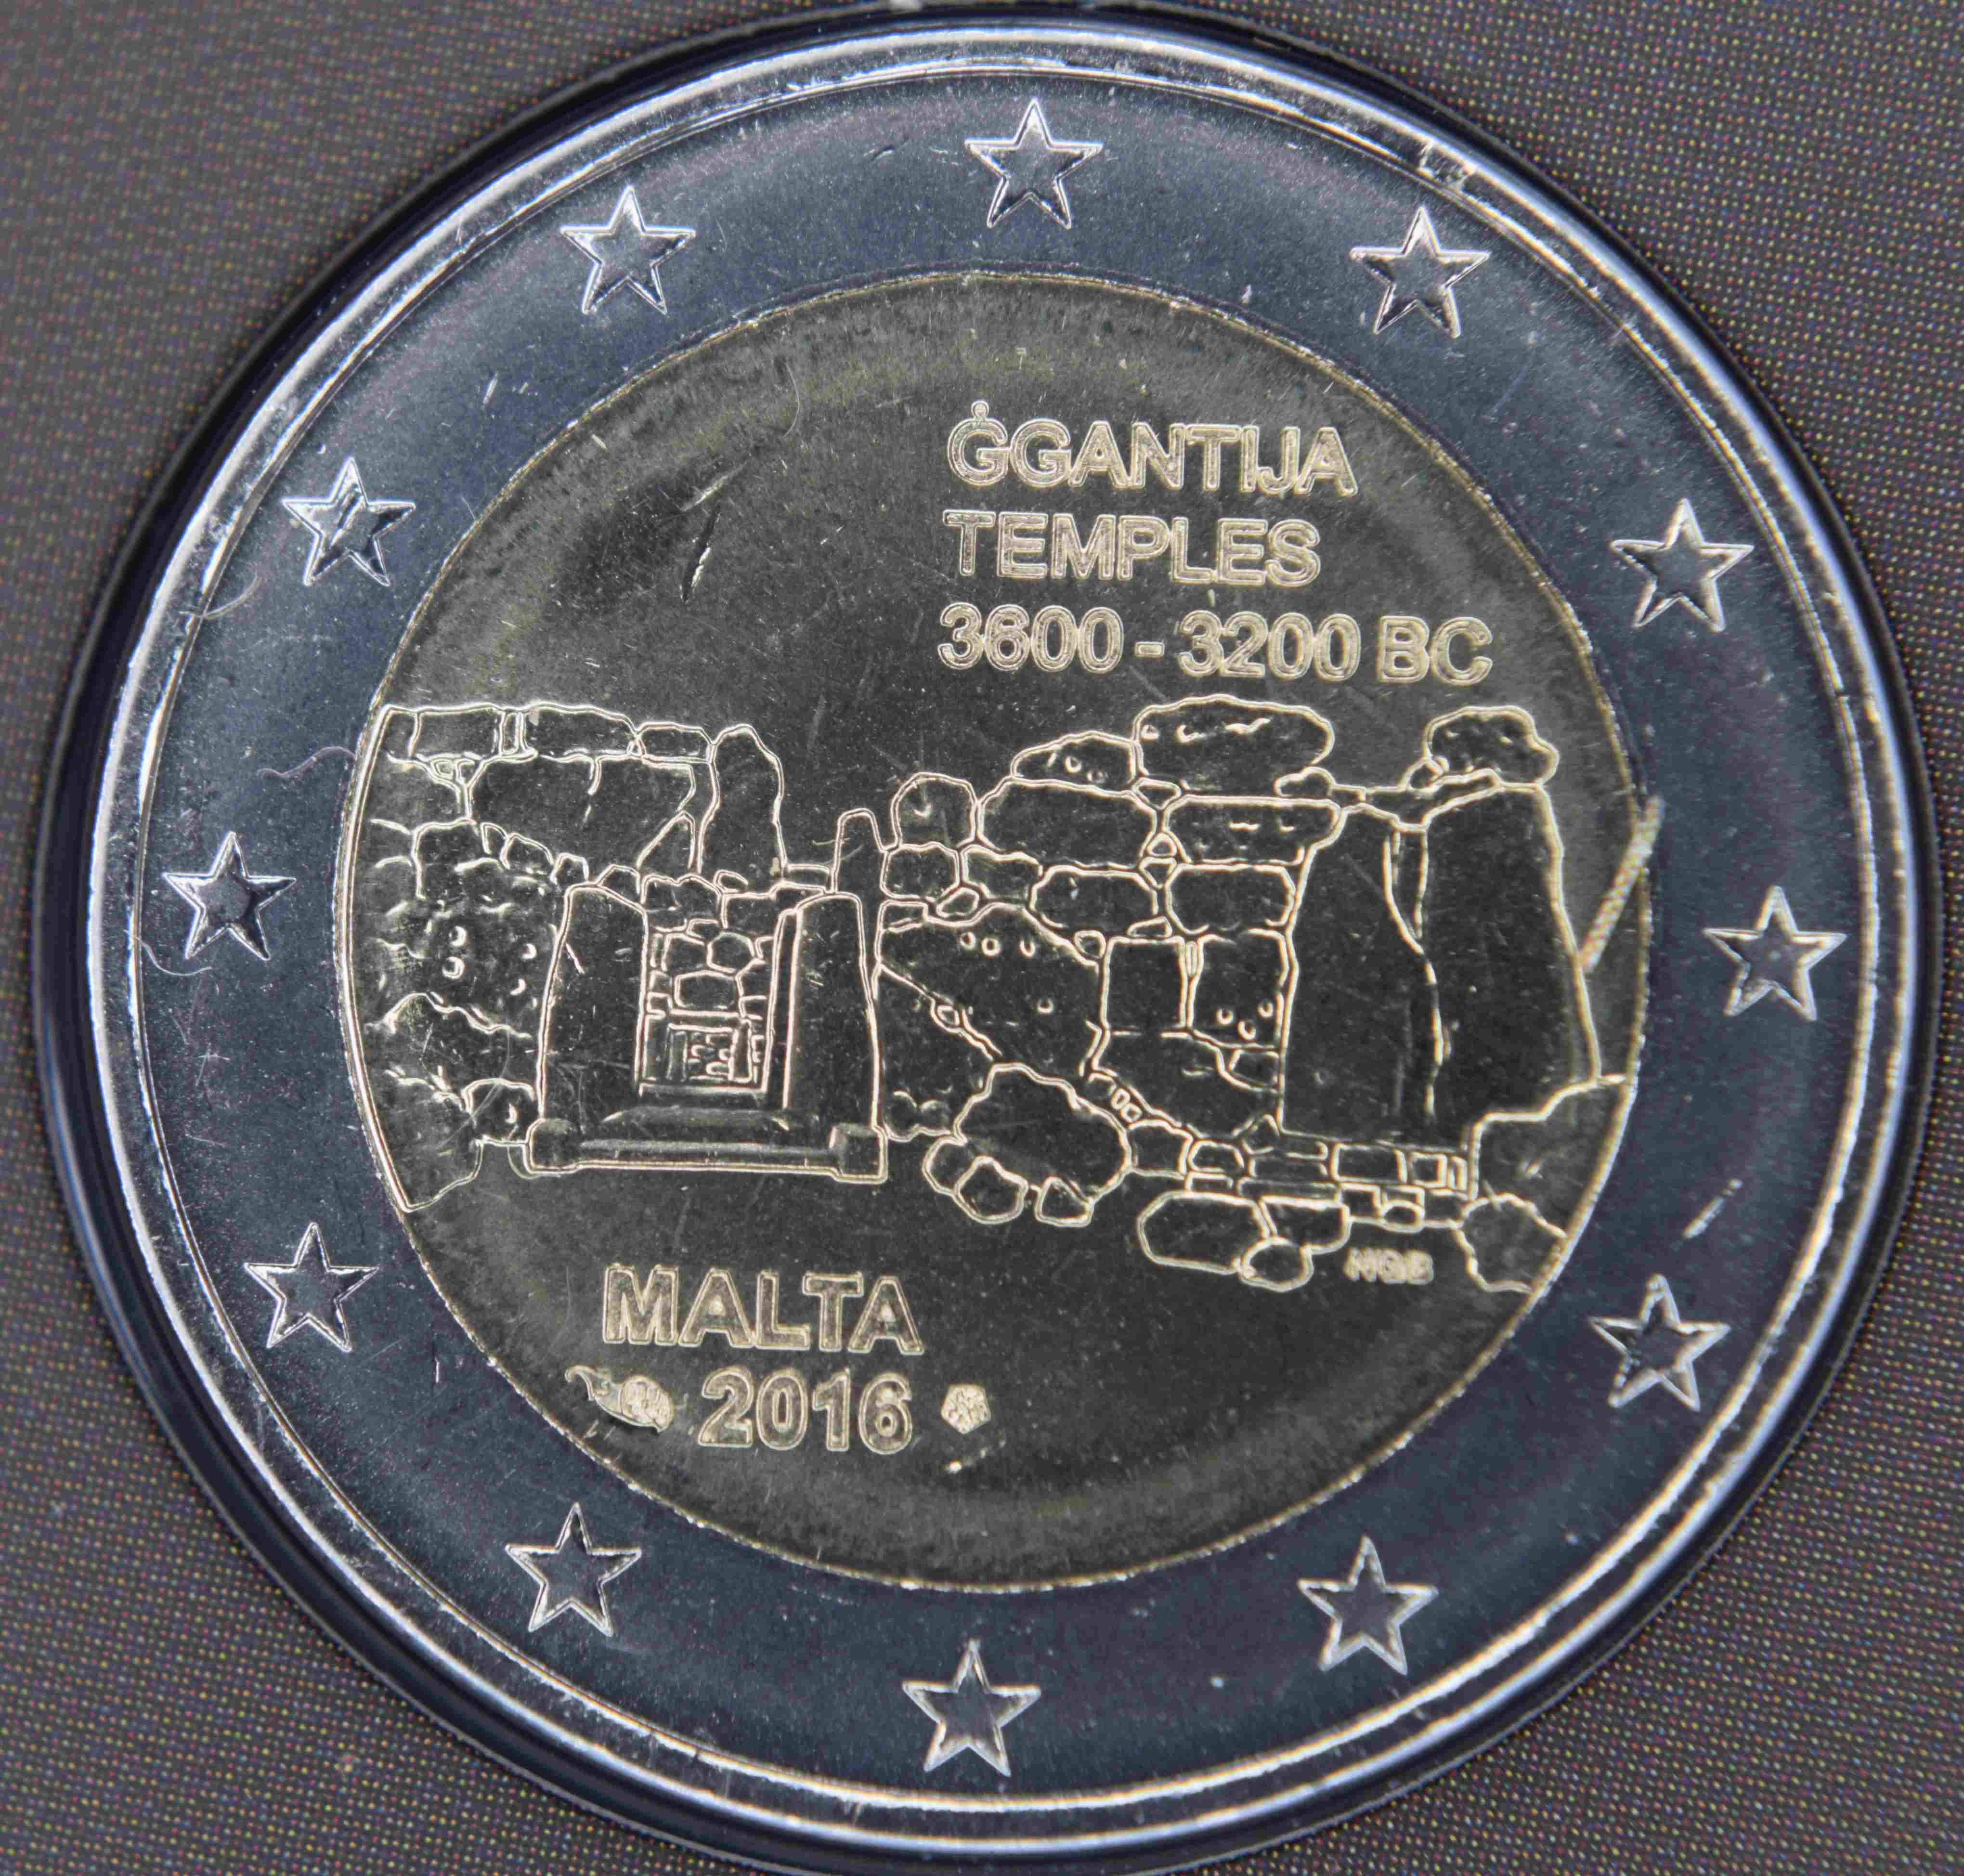 Ggantija temples MALTA 2 EURO 2016 Commemorative 2 Euro Coin UNCIRCULATED 